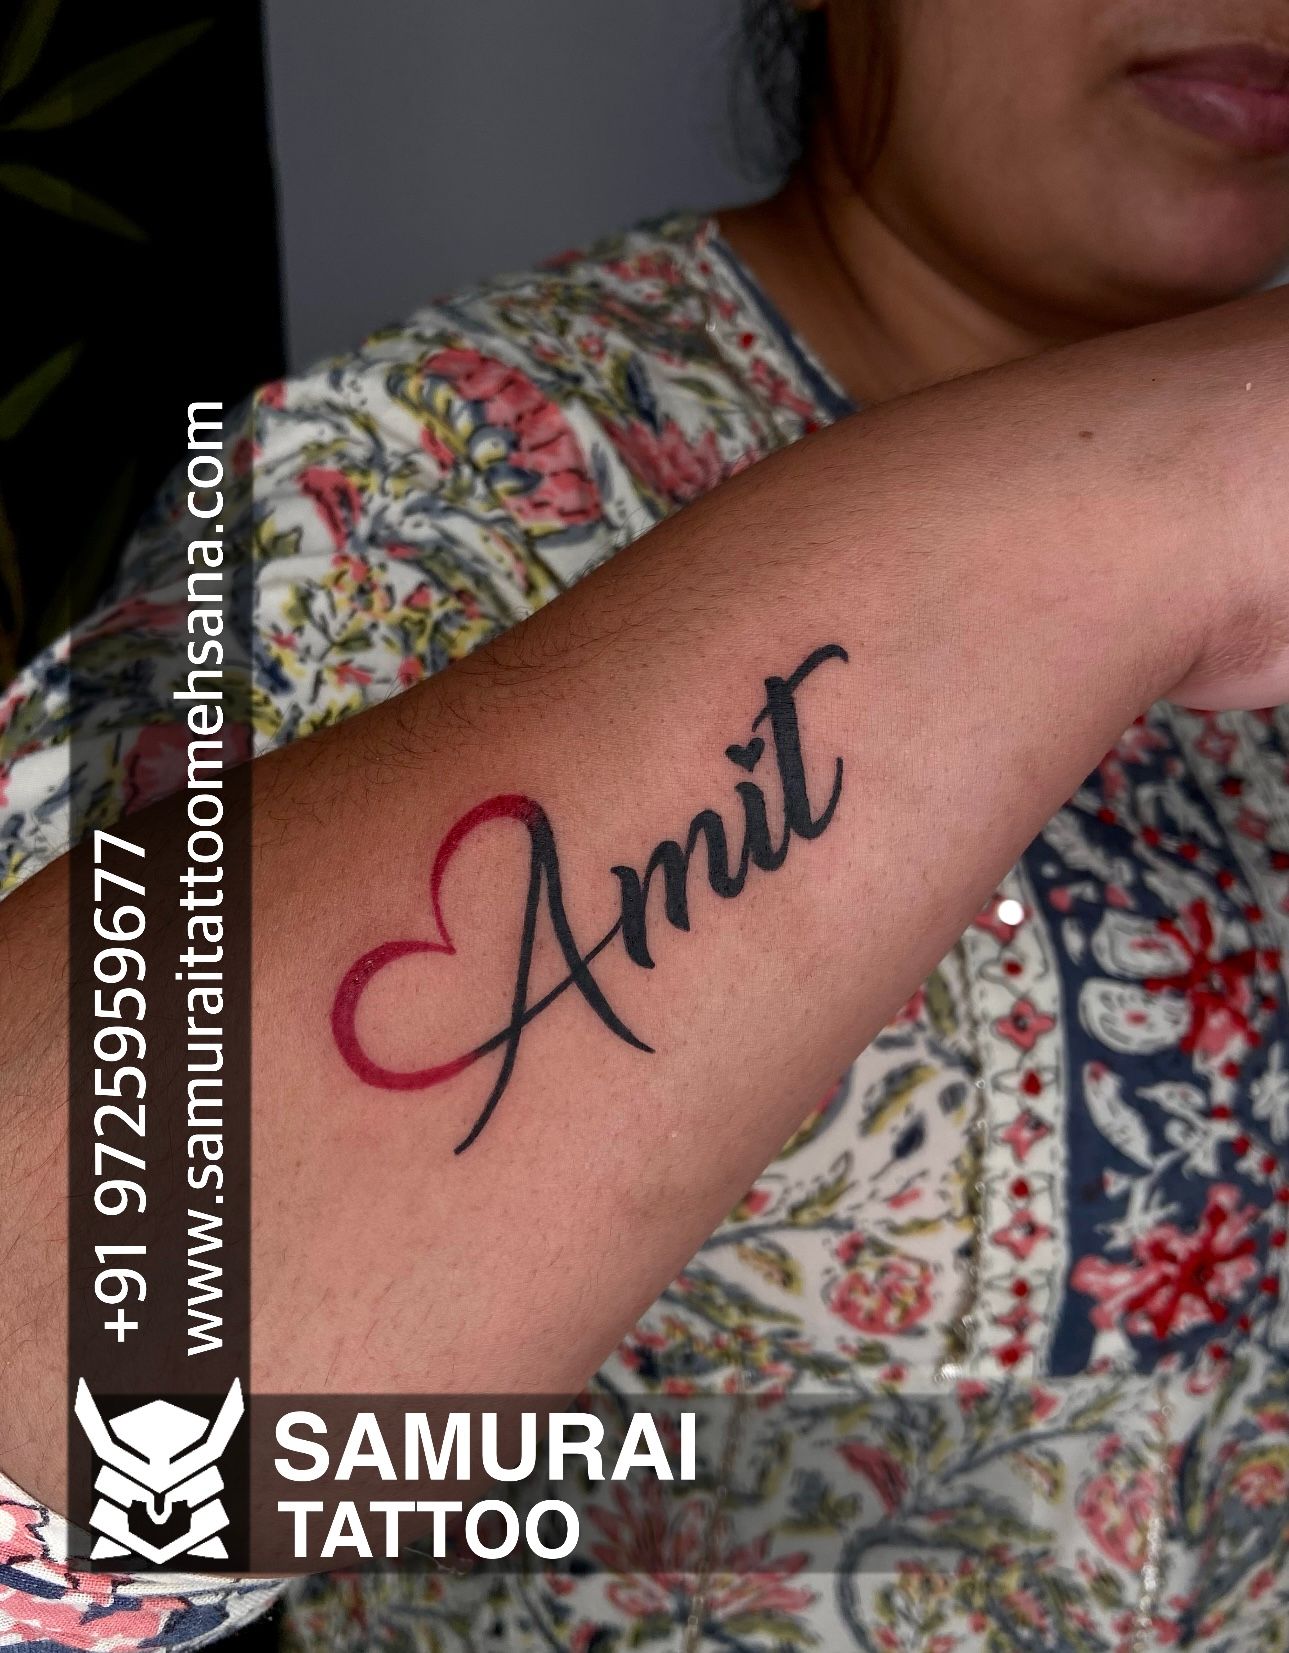 Tattoo uploaded by Samurai Tattoo mehsana  Amit name tattoo Amit tattoo  ideas Amit tattoo Amit name tattoo ideas  Tattoodo